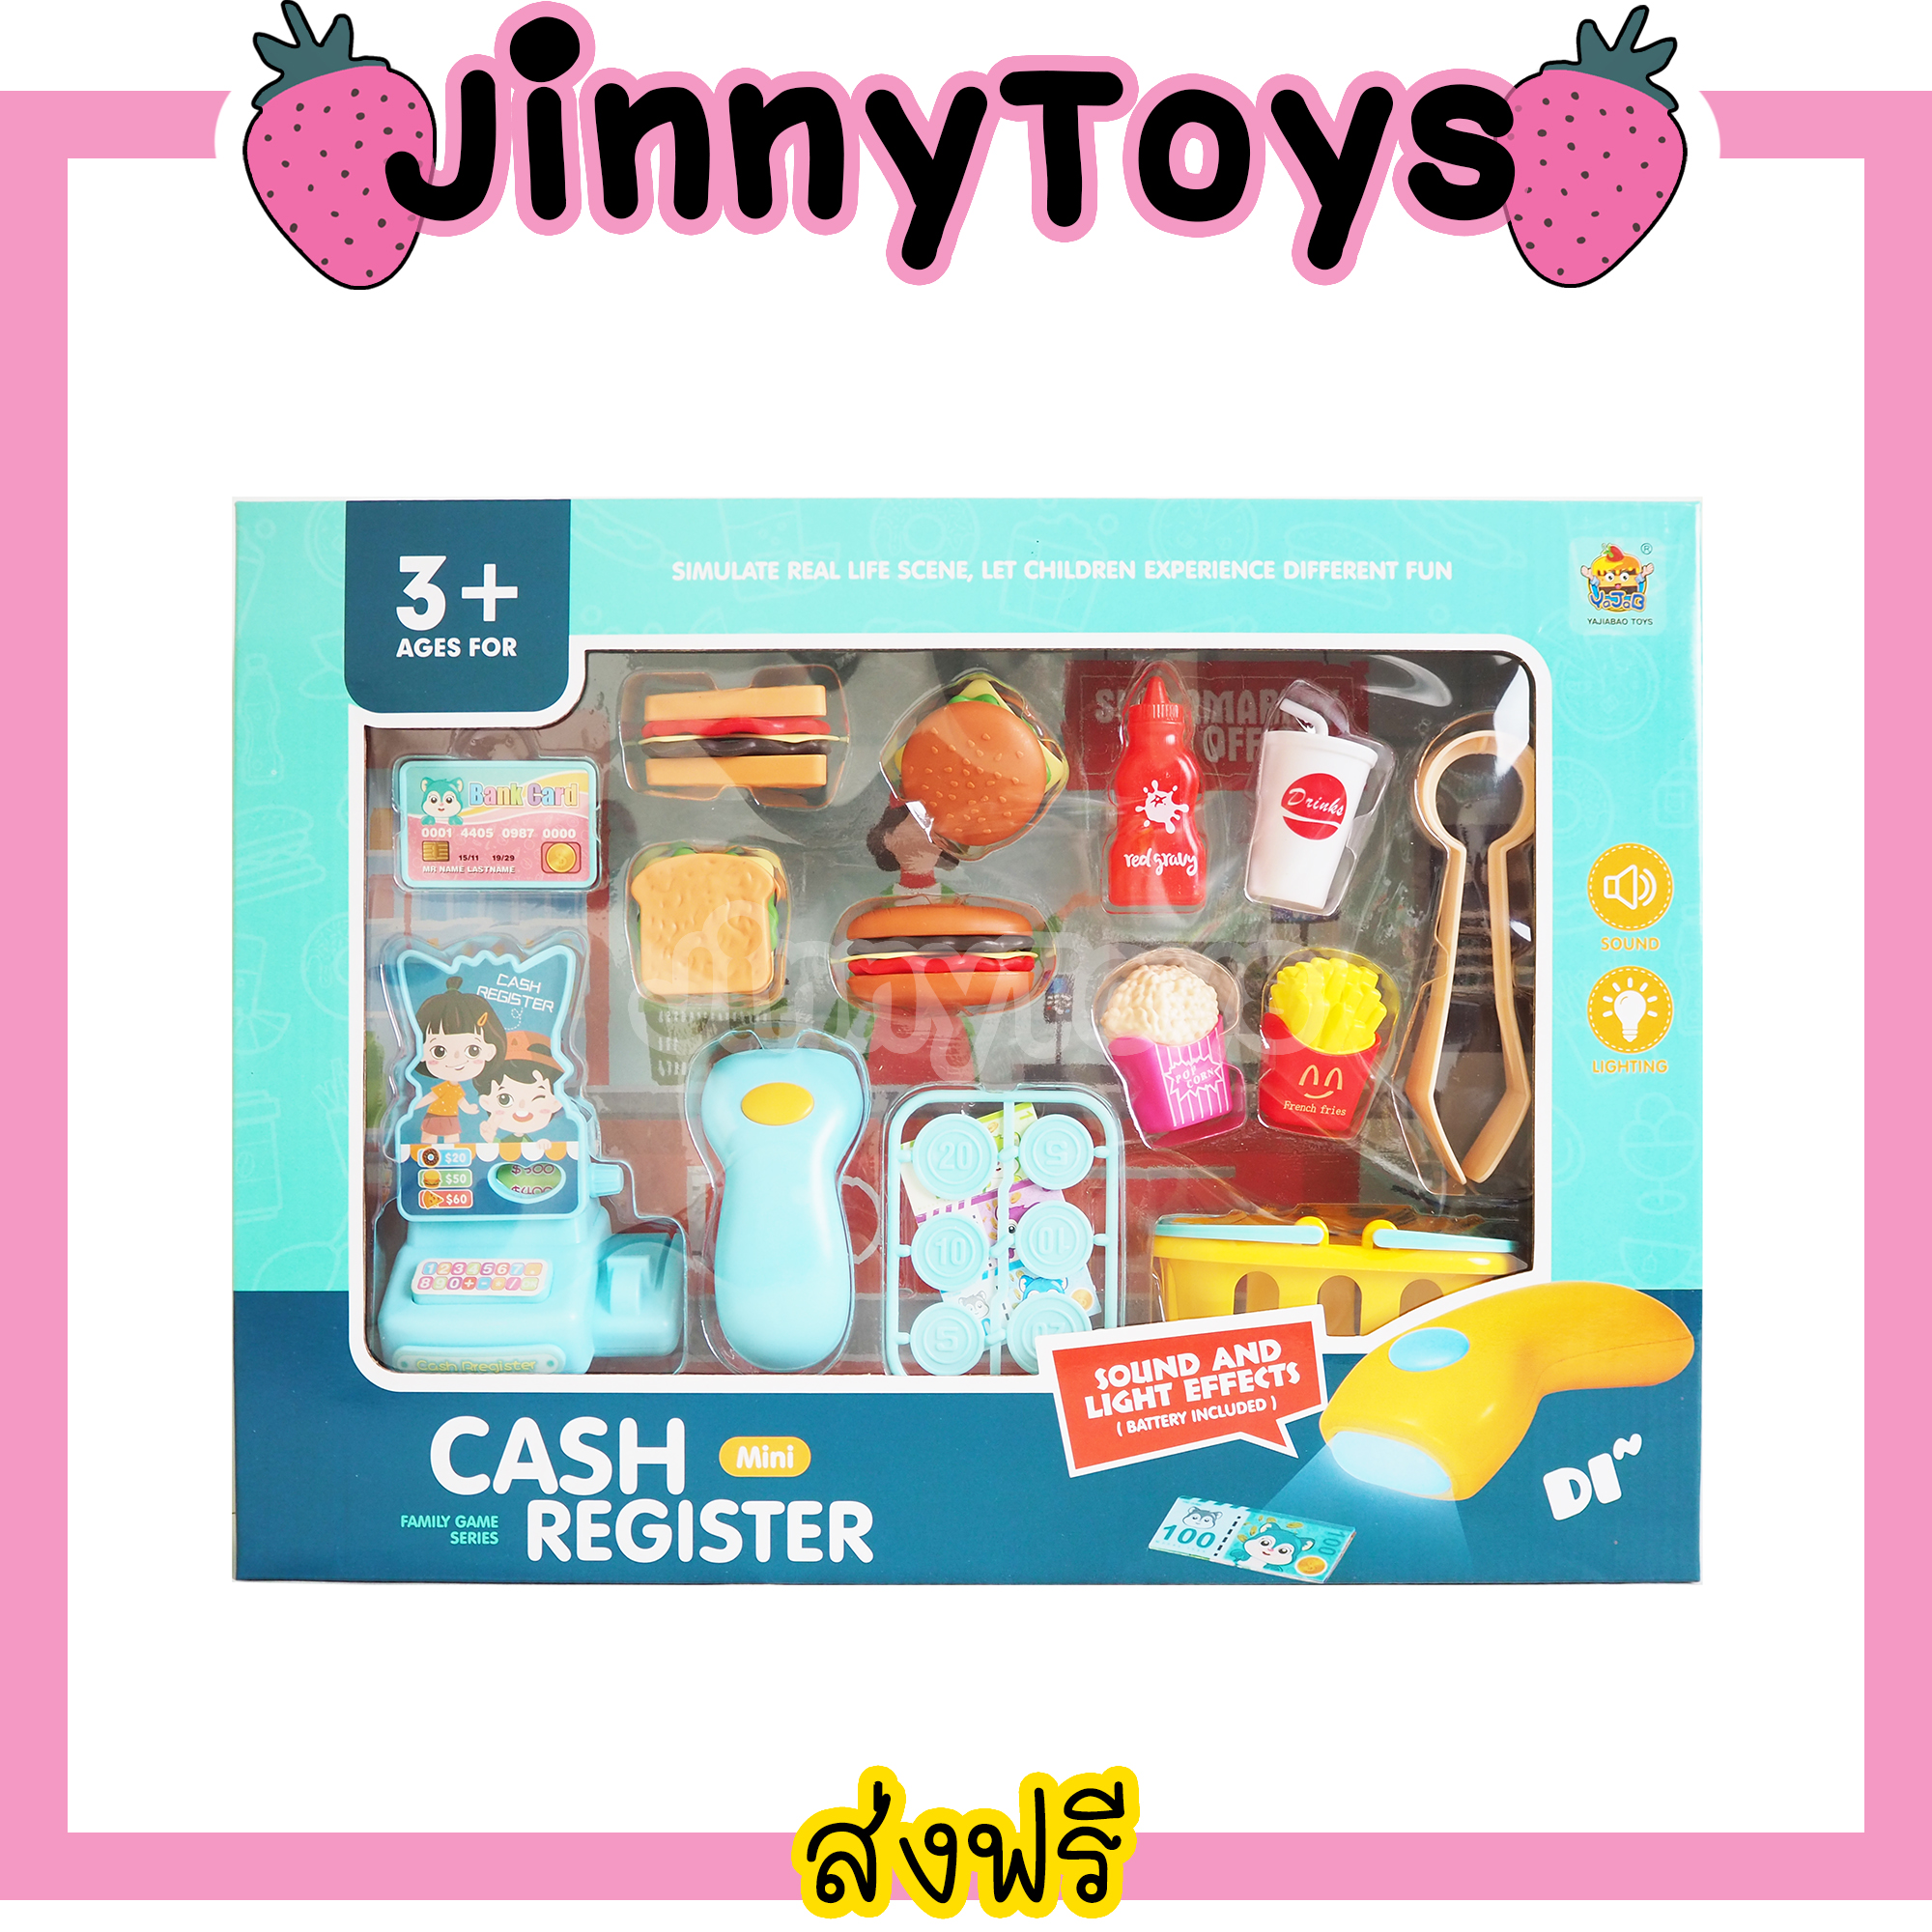 Jinny Toys ขนมของเล่น ของเล่นขายของ Toy Cash Register ชุดของเล่น ชุดแคทเชียร์ ของเล่น แคทเชียร์ แคชเชียร์ แคชเชียร์คิดเงิน ของเล่นซุปเปอร์มาร์เก็ต